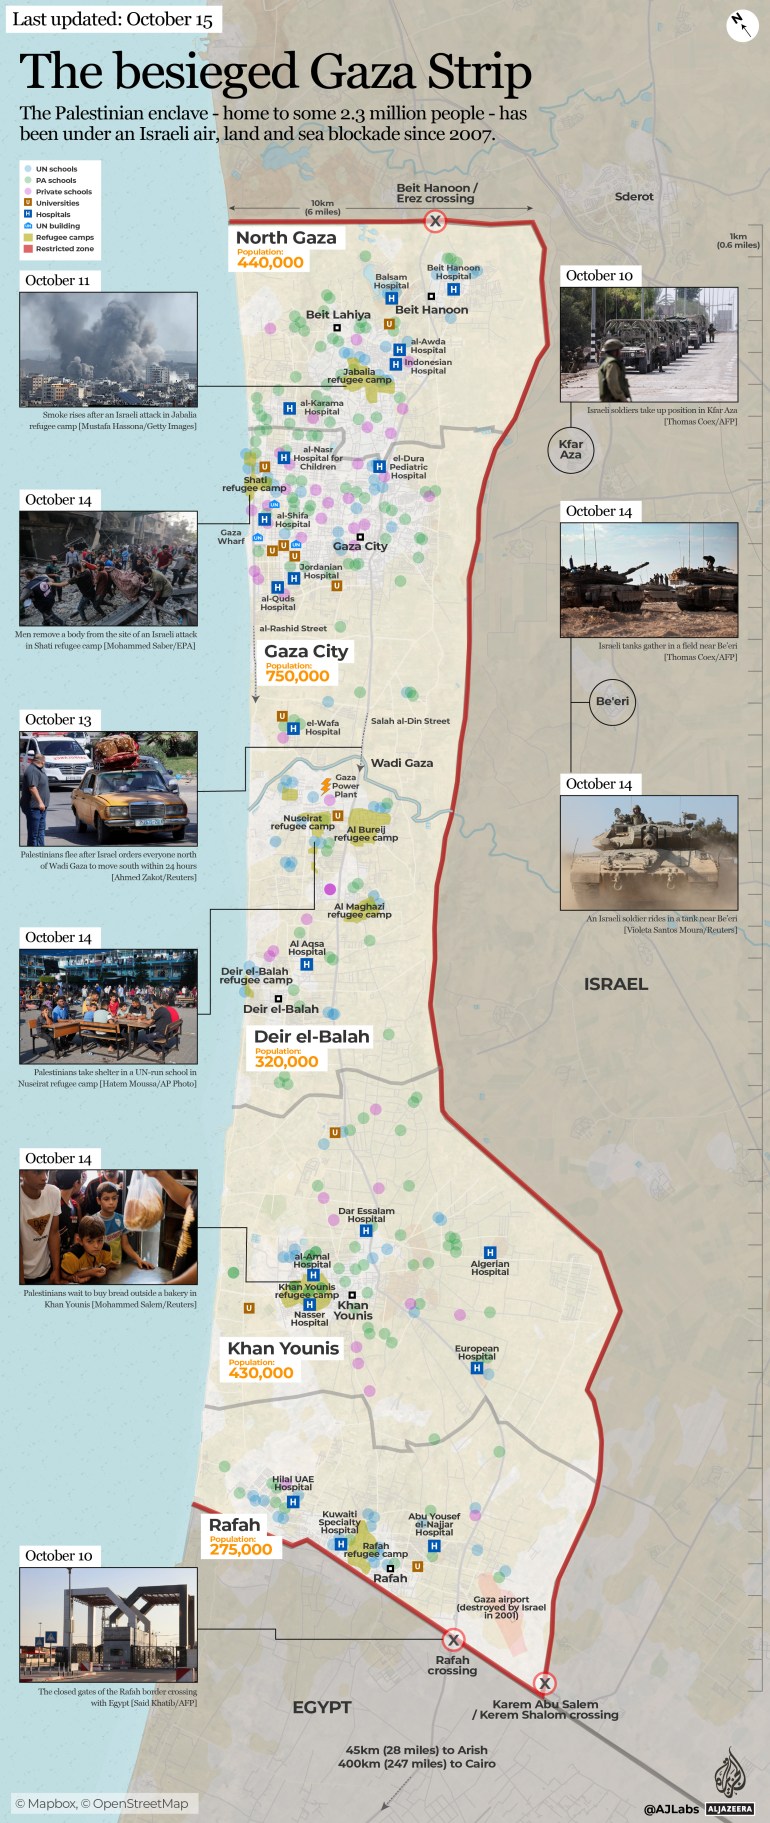 INTERACTIVE - Gaza besieged summary events October 15-80-1697393473